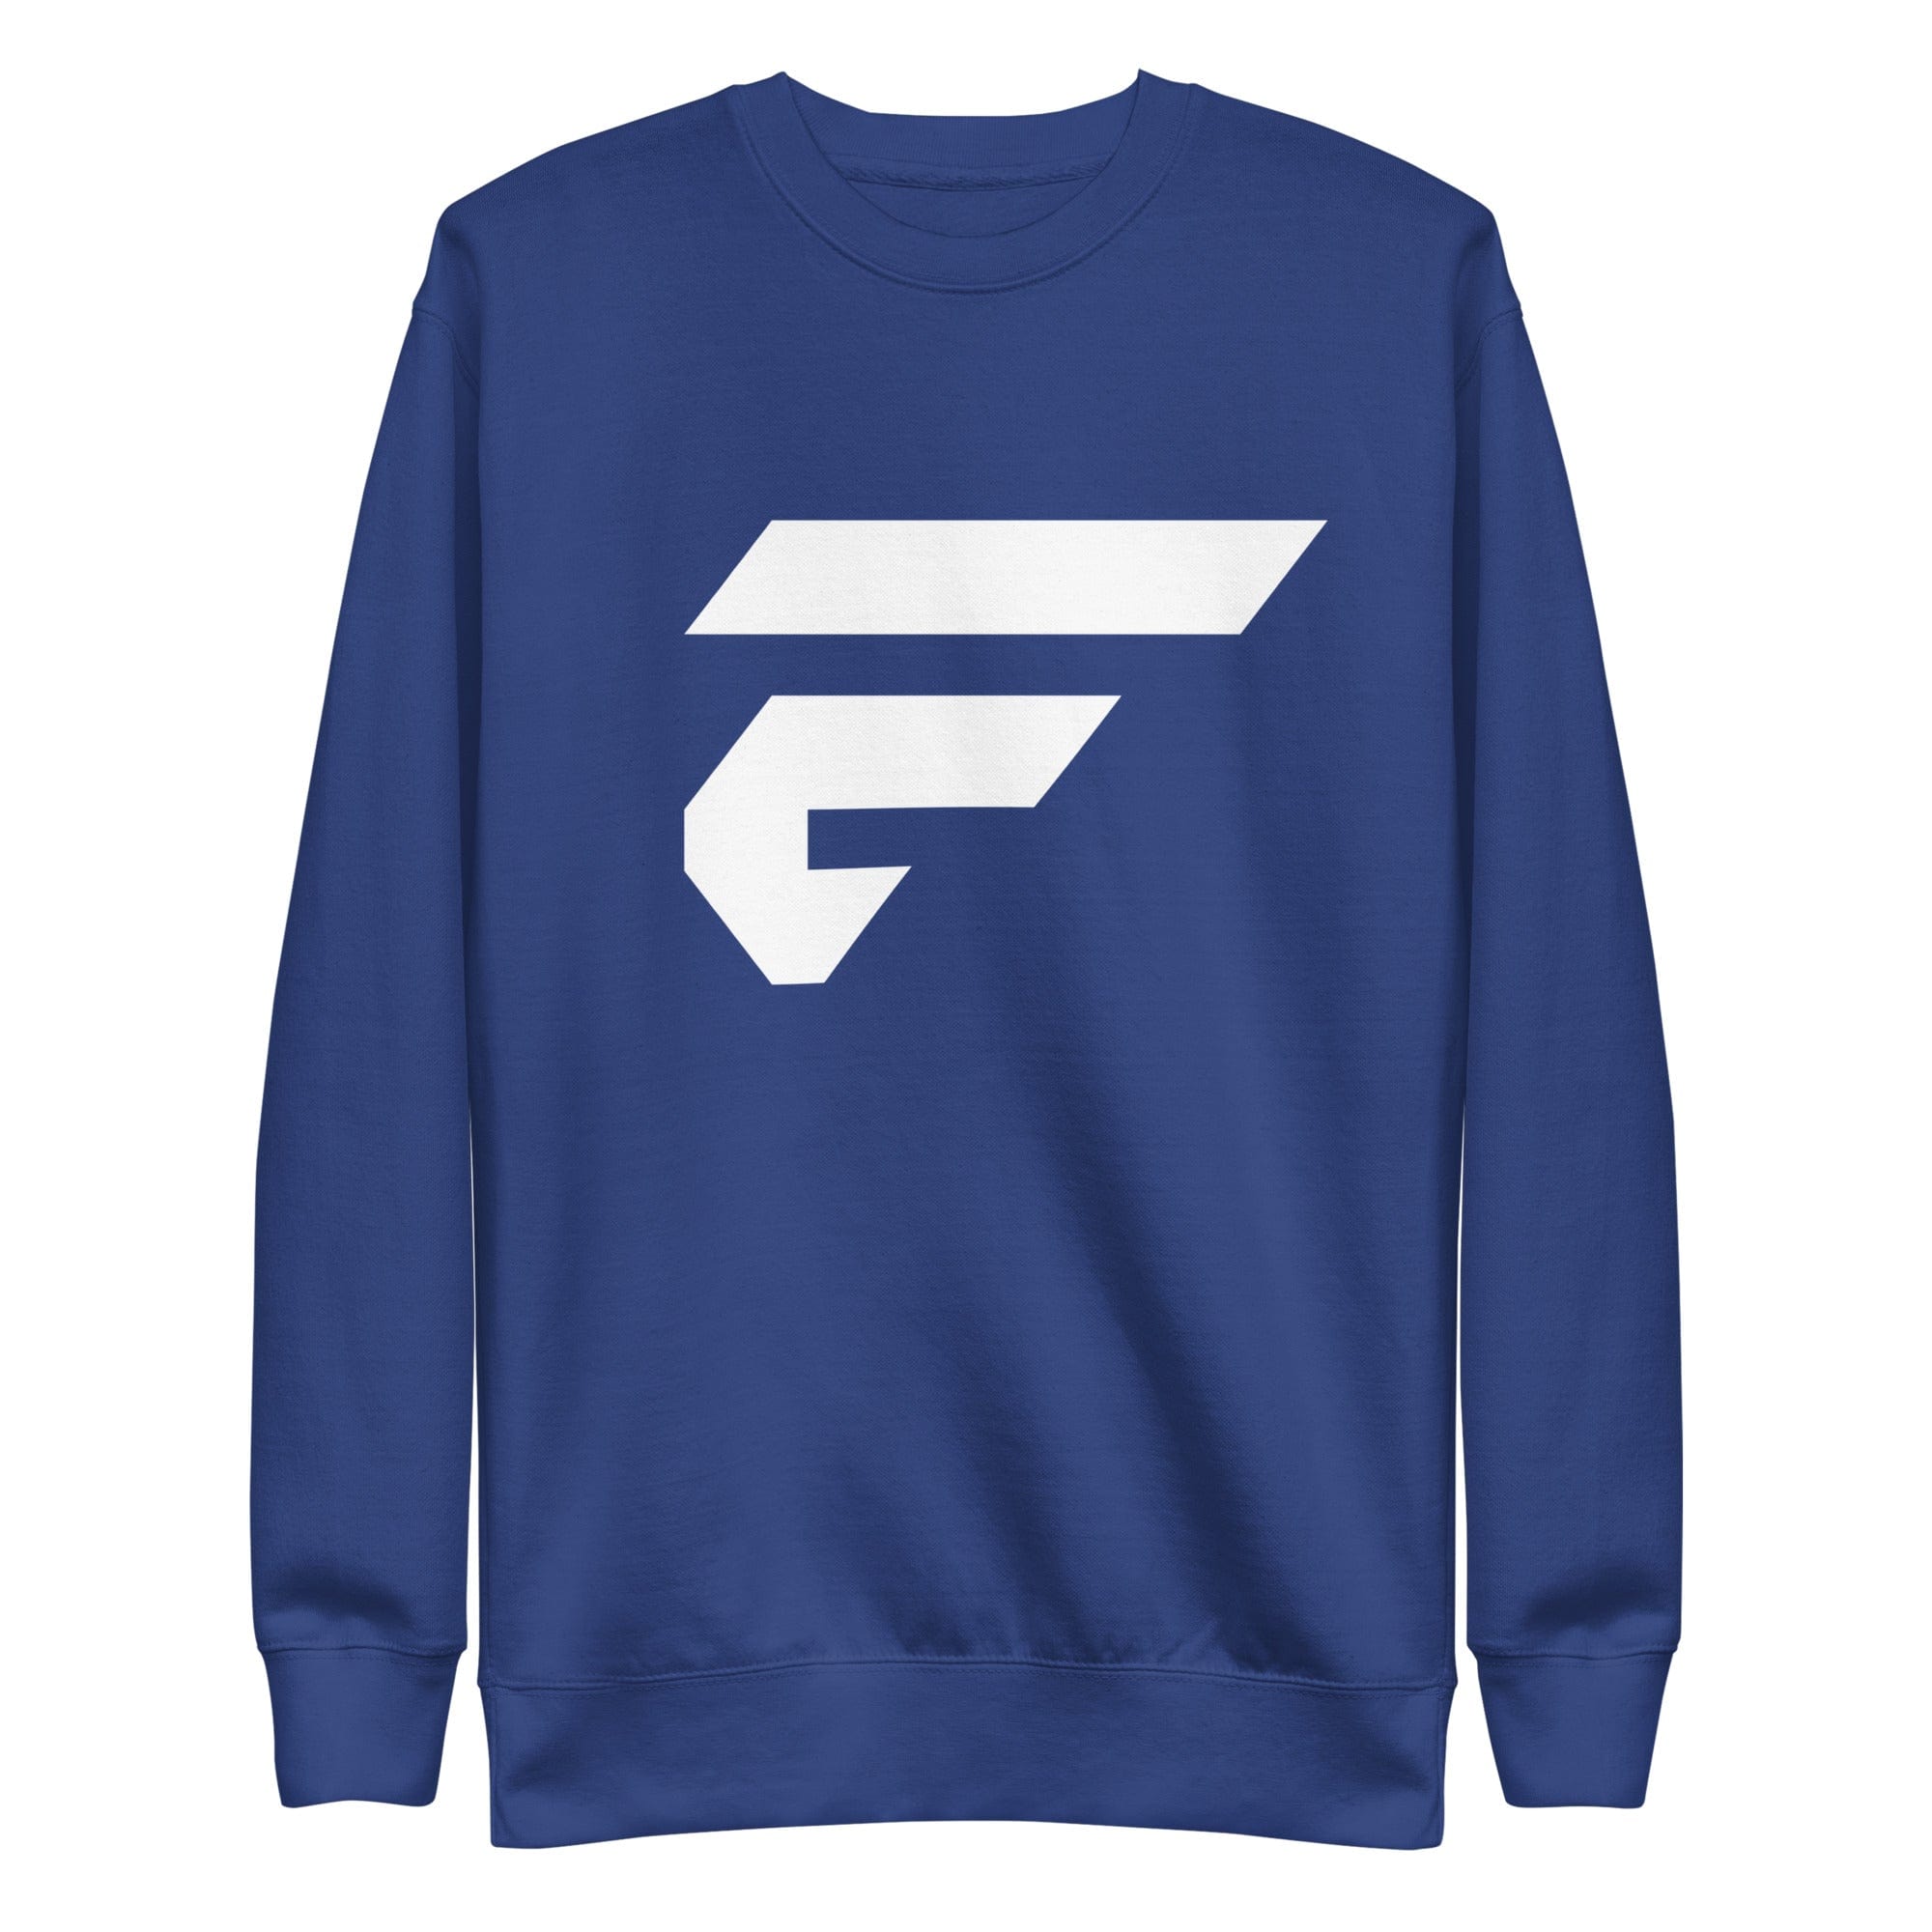 Blue unisex sweatshirt with Fire Cornhole F logo in white